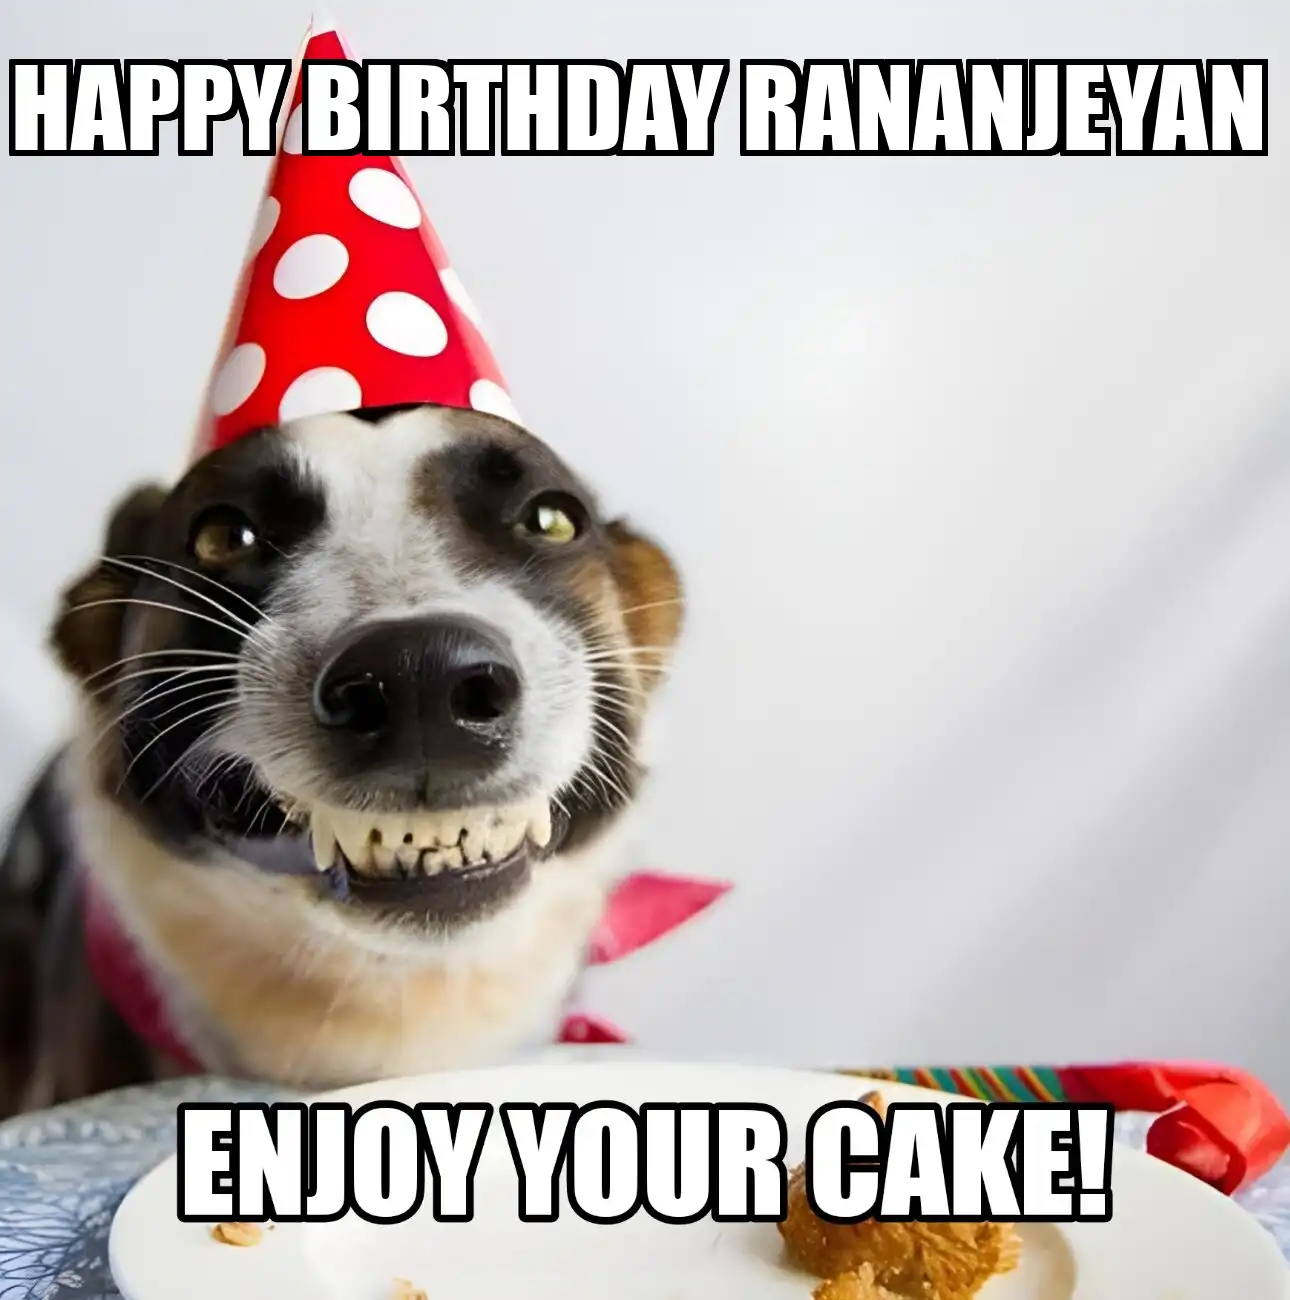 Happy Birthday Rananjeyan Enjoy Your Cake Dog Meme